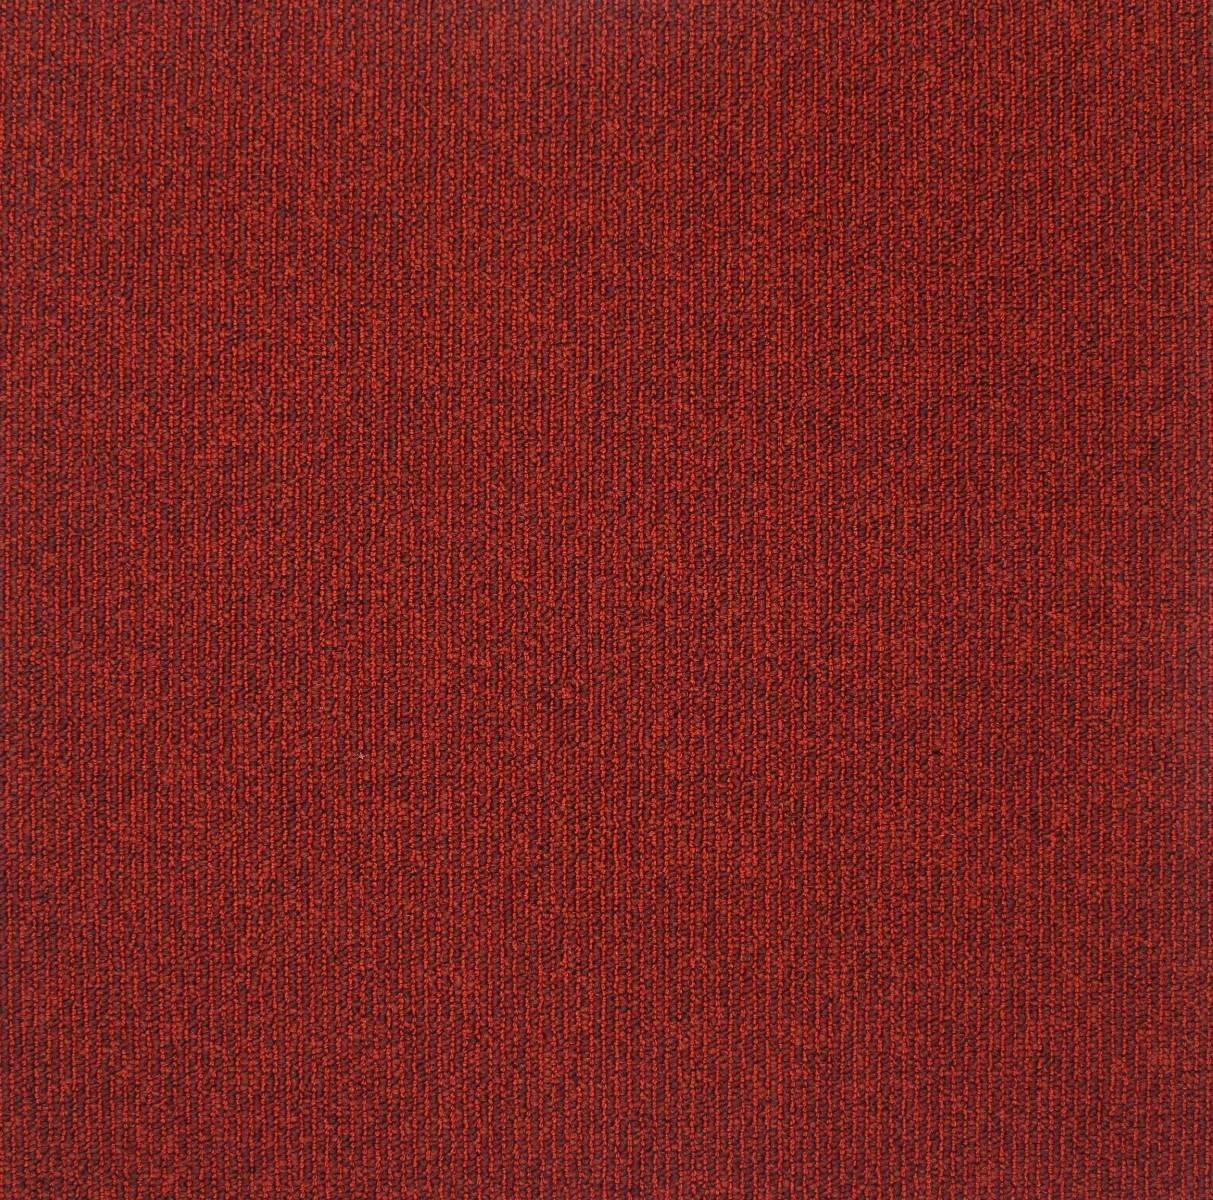 Carpet Tile Desso 4211-Bordo-50cmx50cm-4 PCs